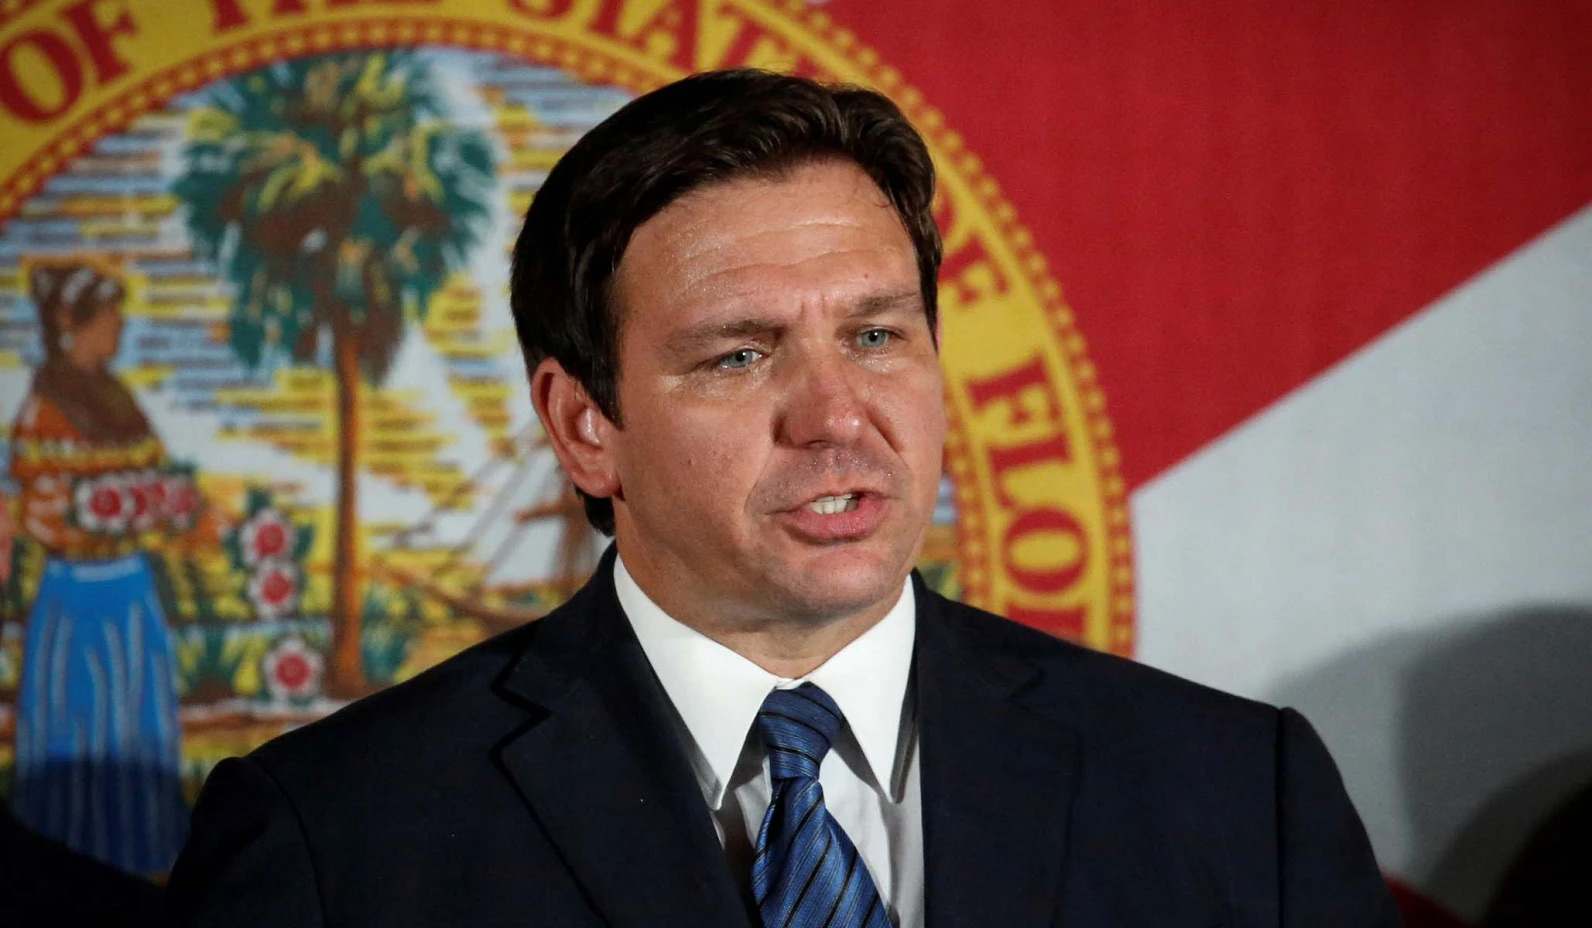 Florida Legislature Passes Bill Approving Program to Relocate Illegal Immigrants